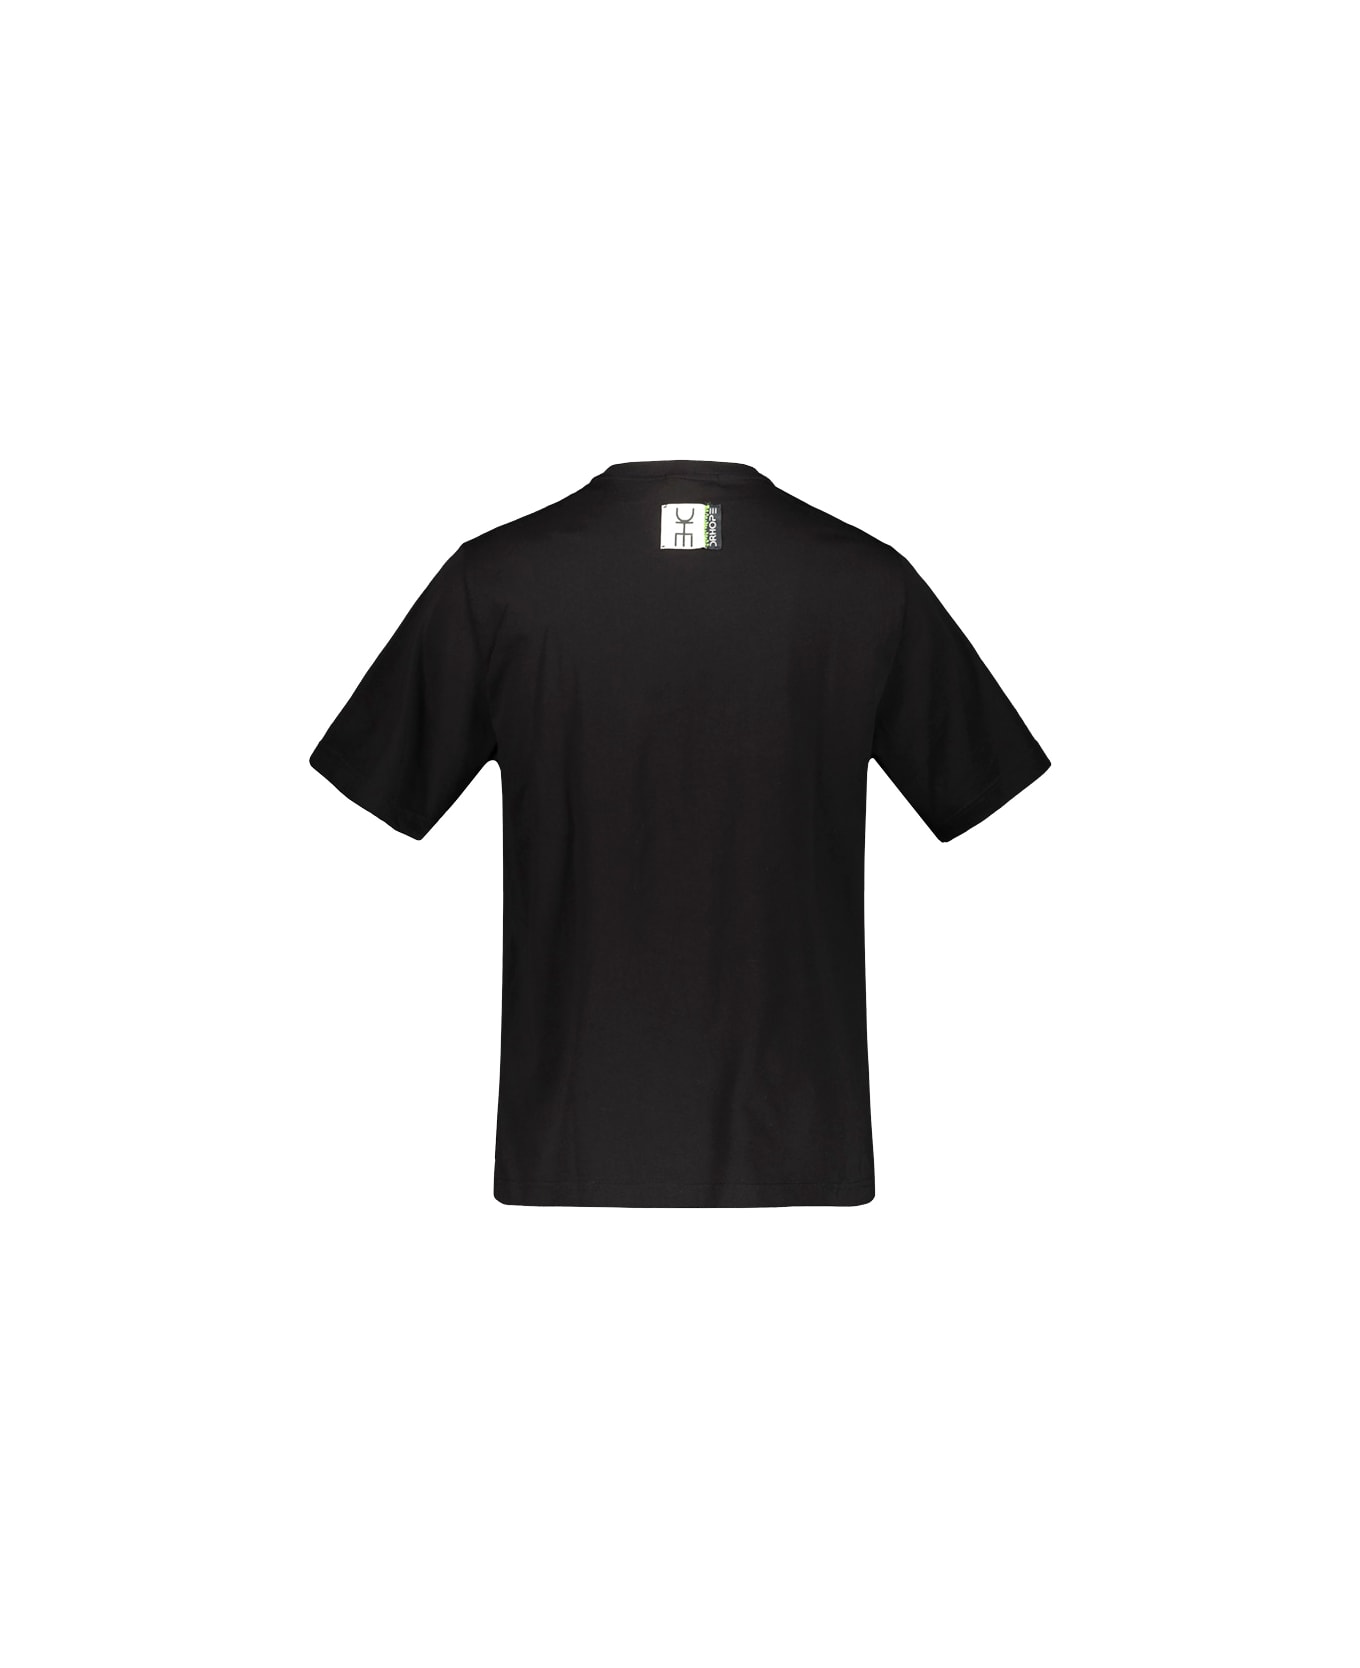 Drhope Black T-shirt With Pig Print - Black